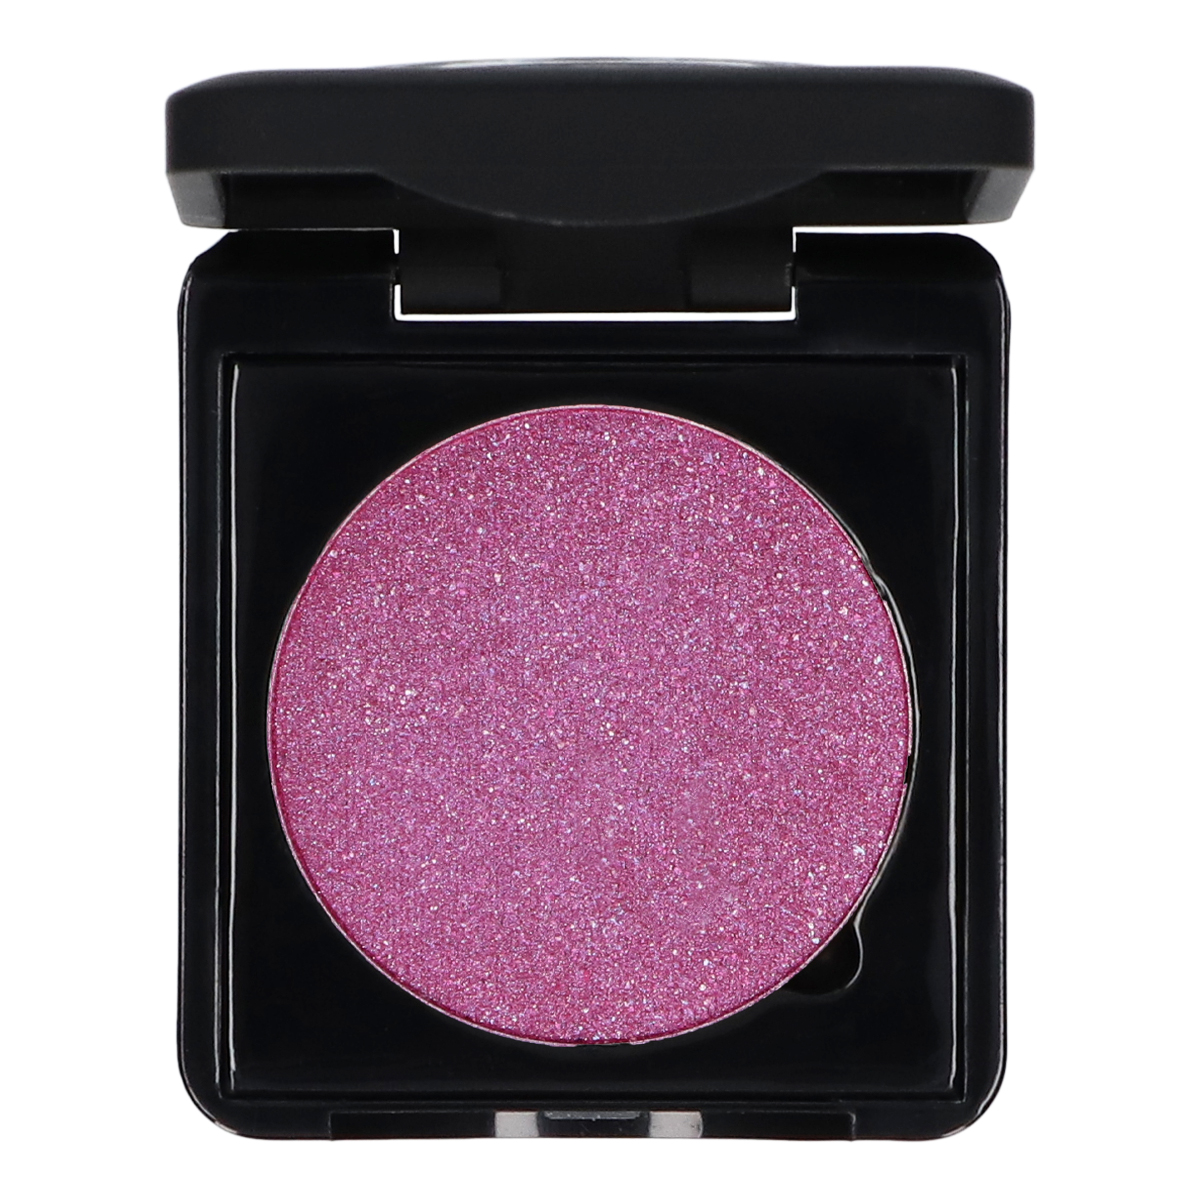 Make-up Studio Eyeshadow Super Frost - Pure Pink